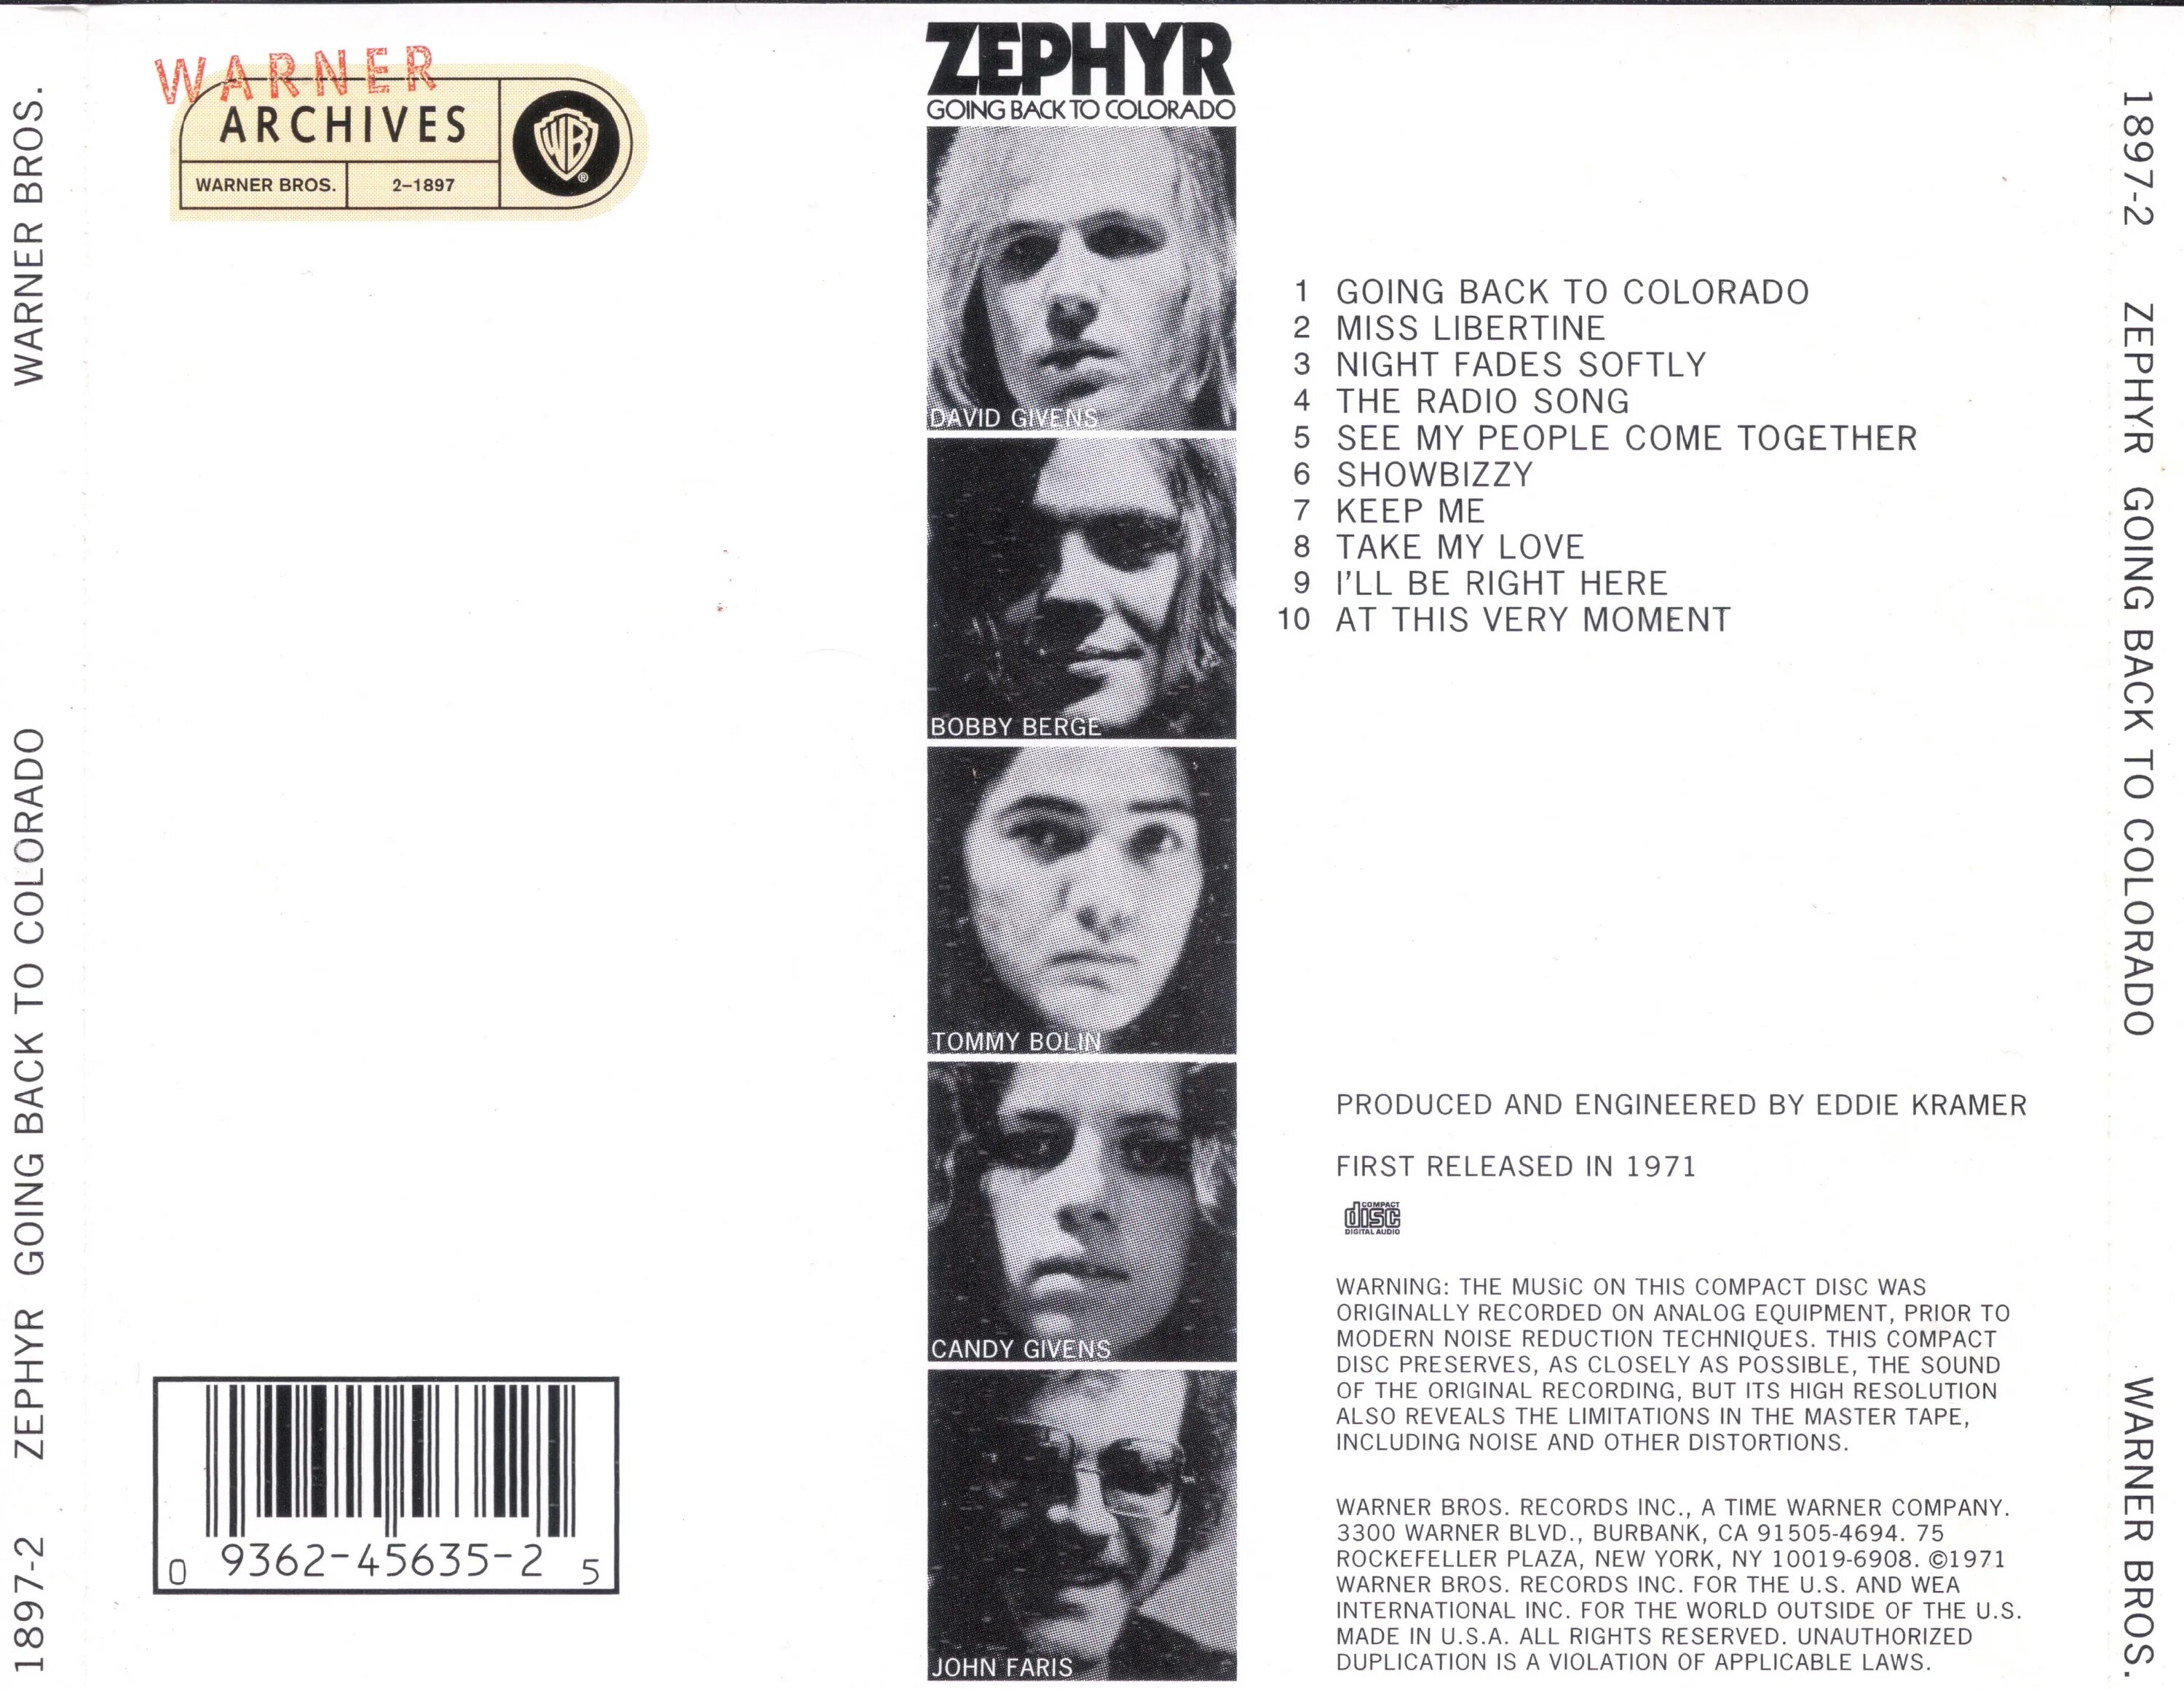 Zephyr 1971. Zephyr - going back to Colorado. Zephyr - going back to Colorado 1971. Going back. Песня goes back